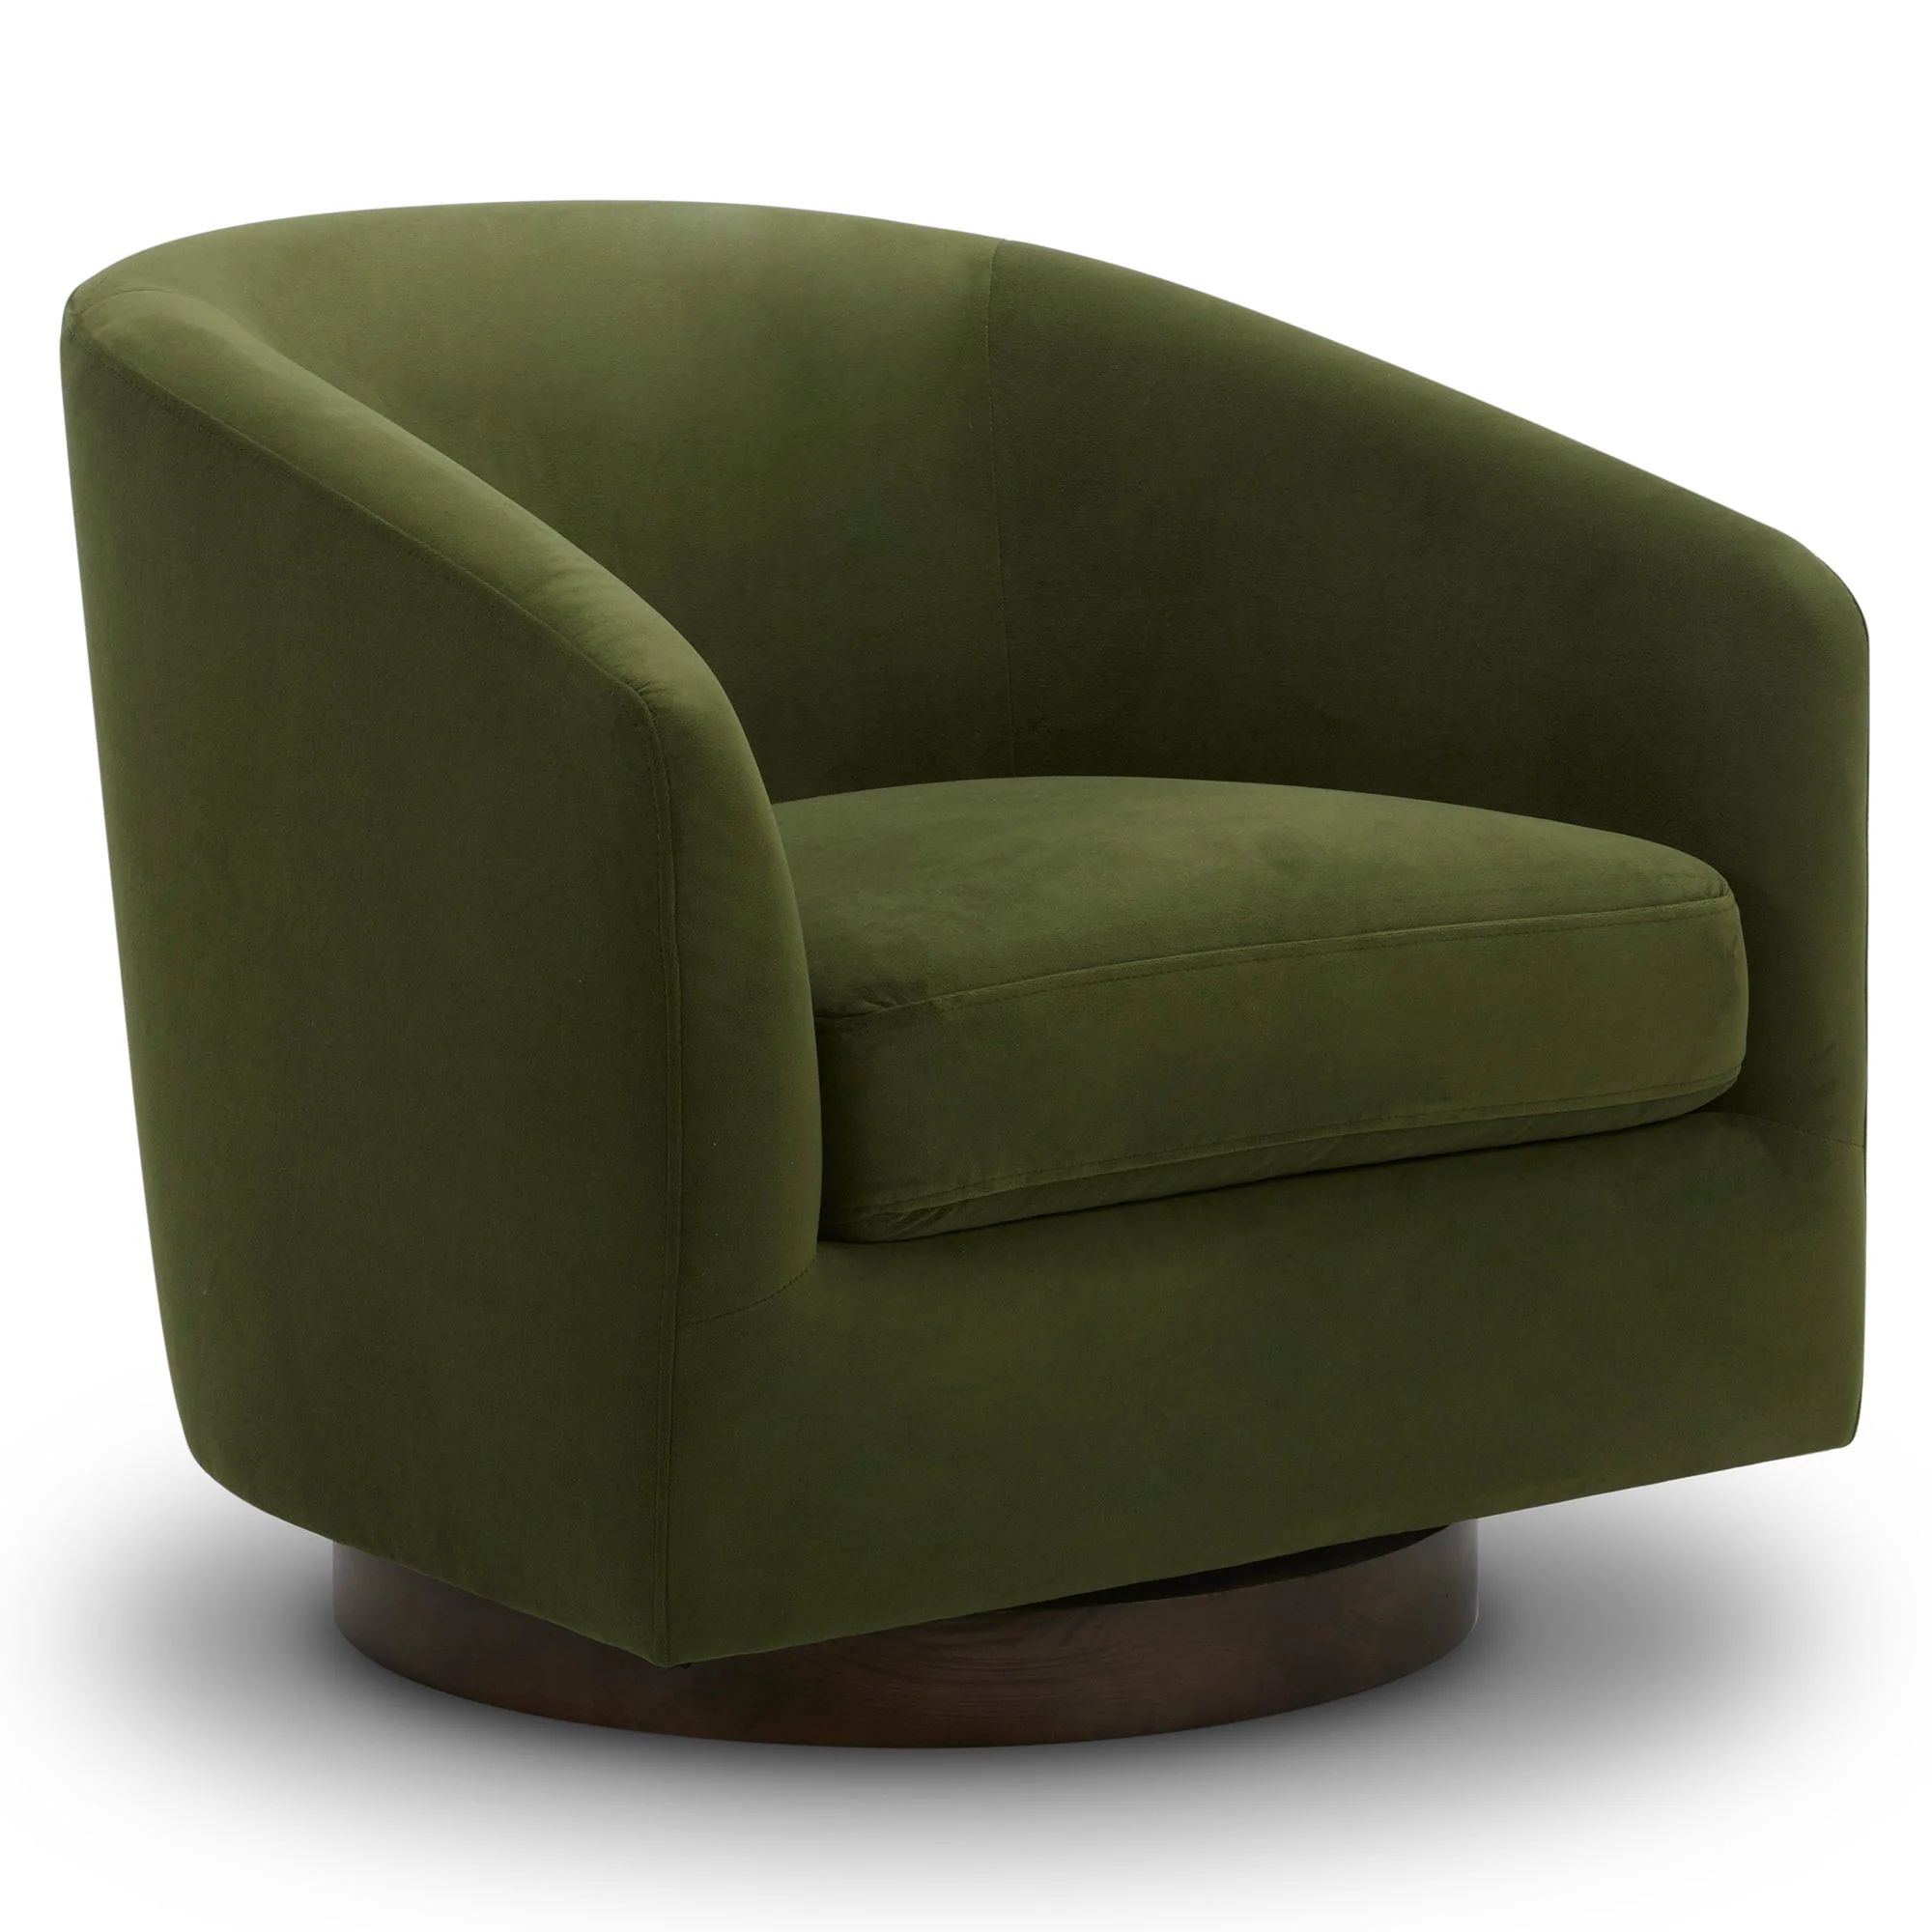 CHITA®️ Wren Modern Swivel Accent Chair - chitaliving.com | Chita